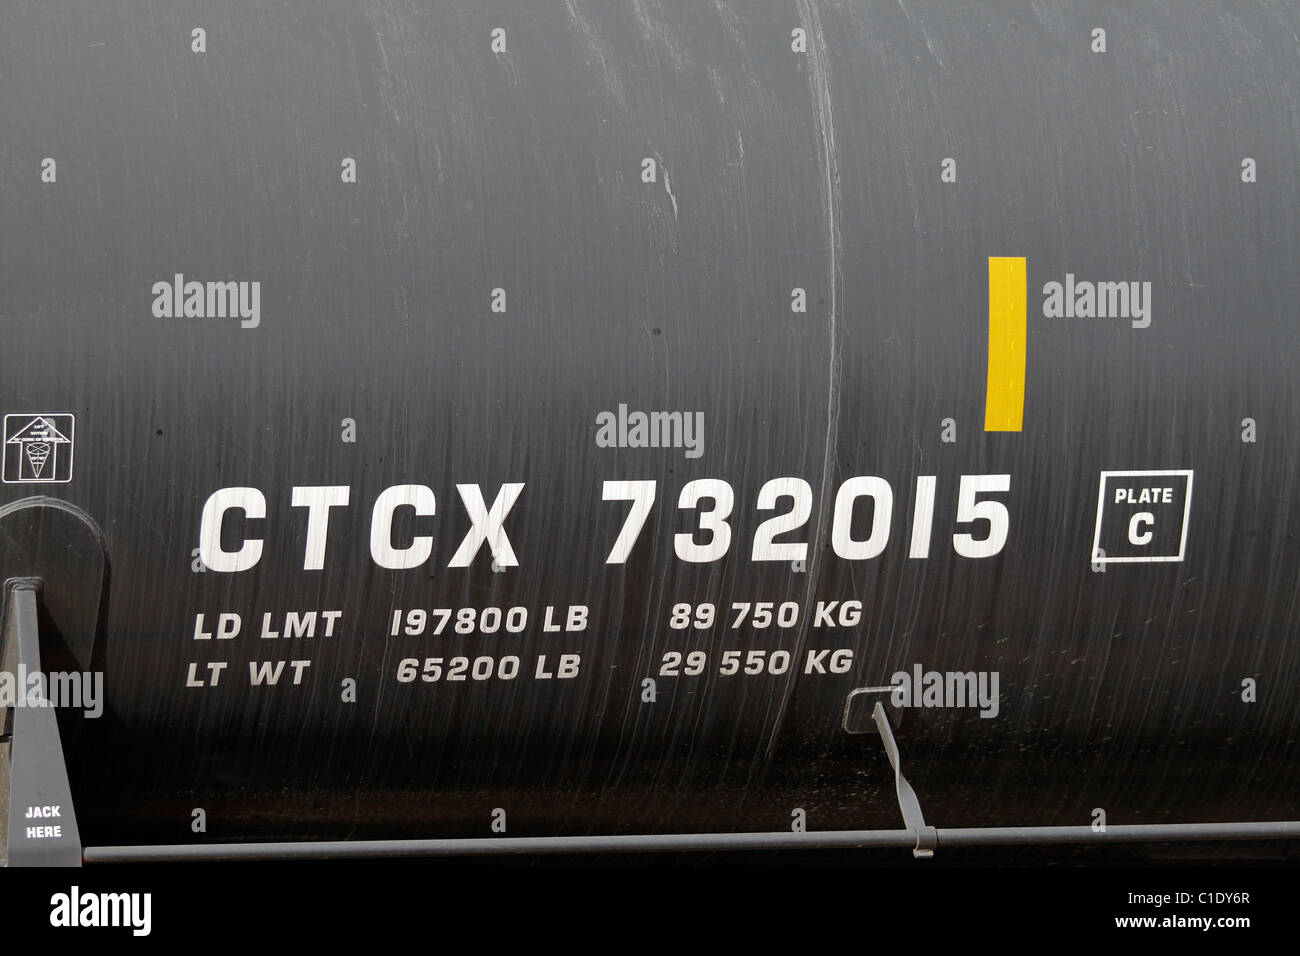 Nomenclature on Ethanol tank rail car Stock Photo